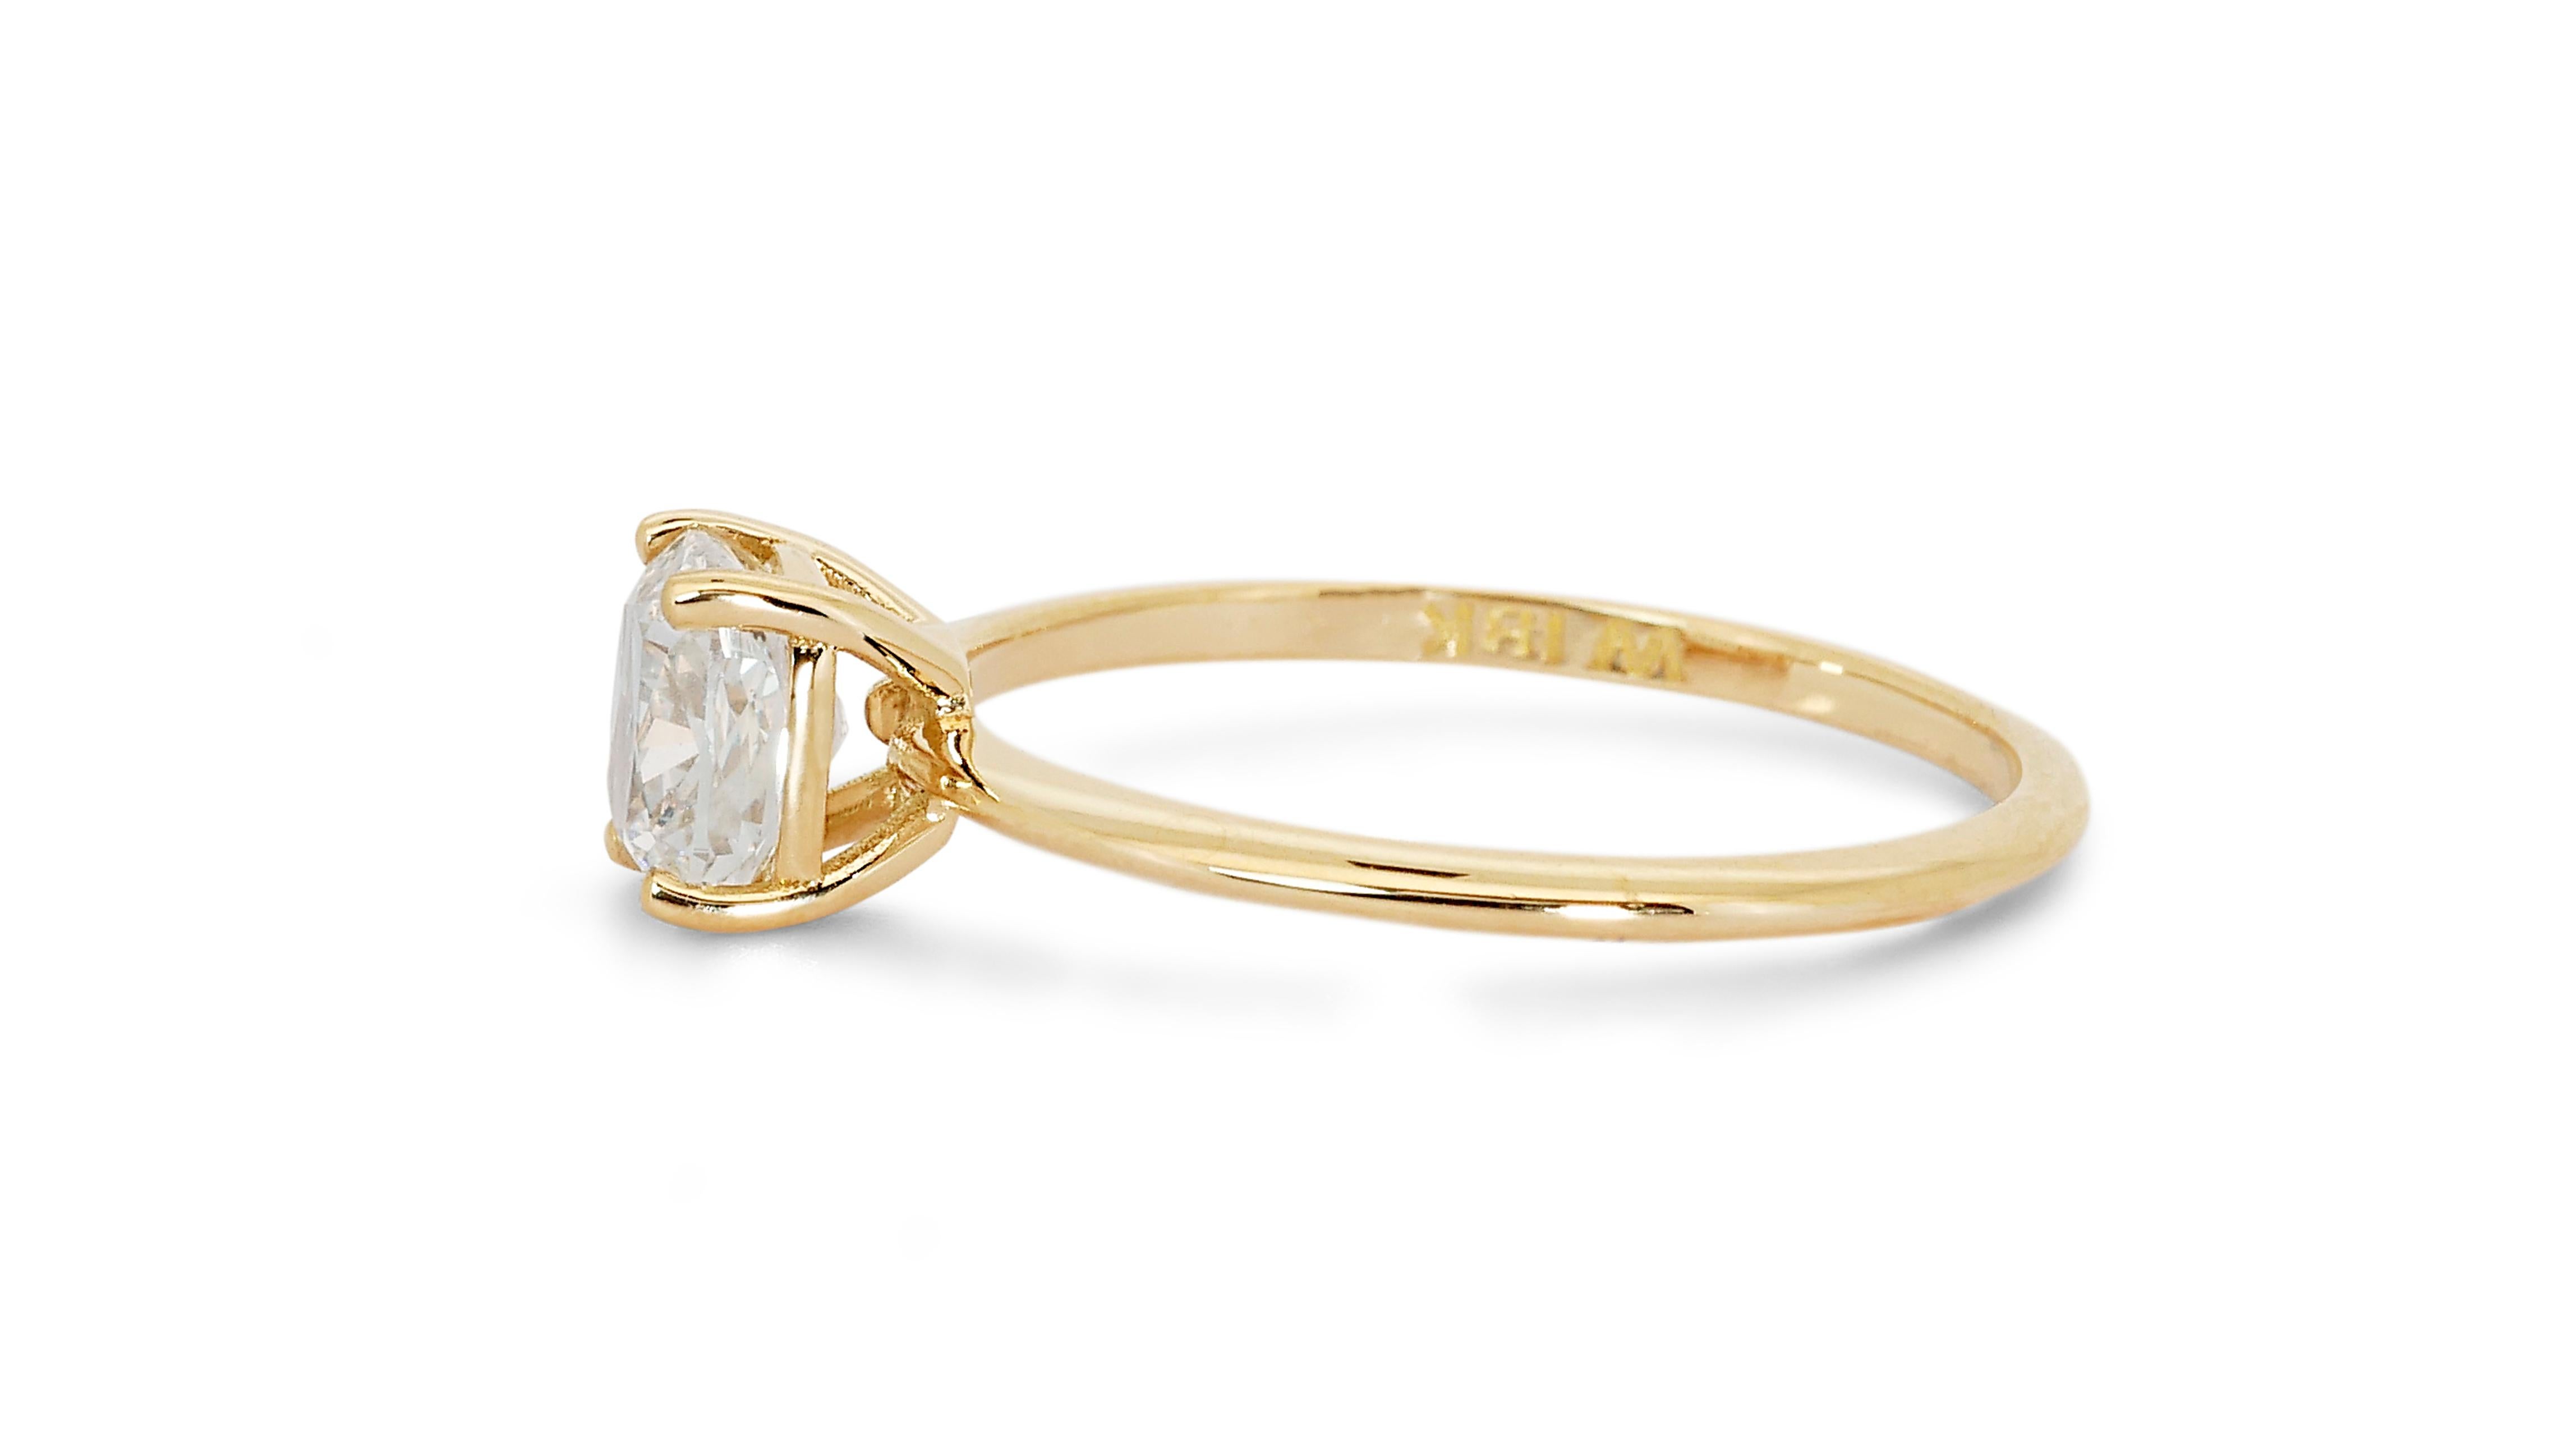 Women's Glamorous 18k Yellow Gold Solitaire Ring w/ 1.02 Carat Natural Diamonds IGI Cert For Sale